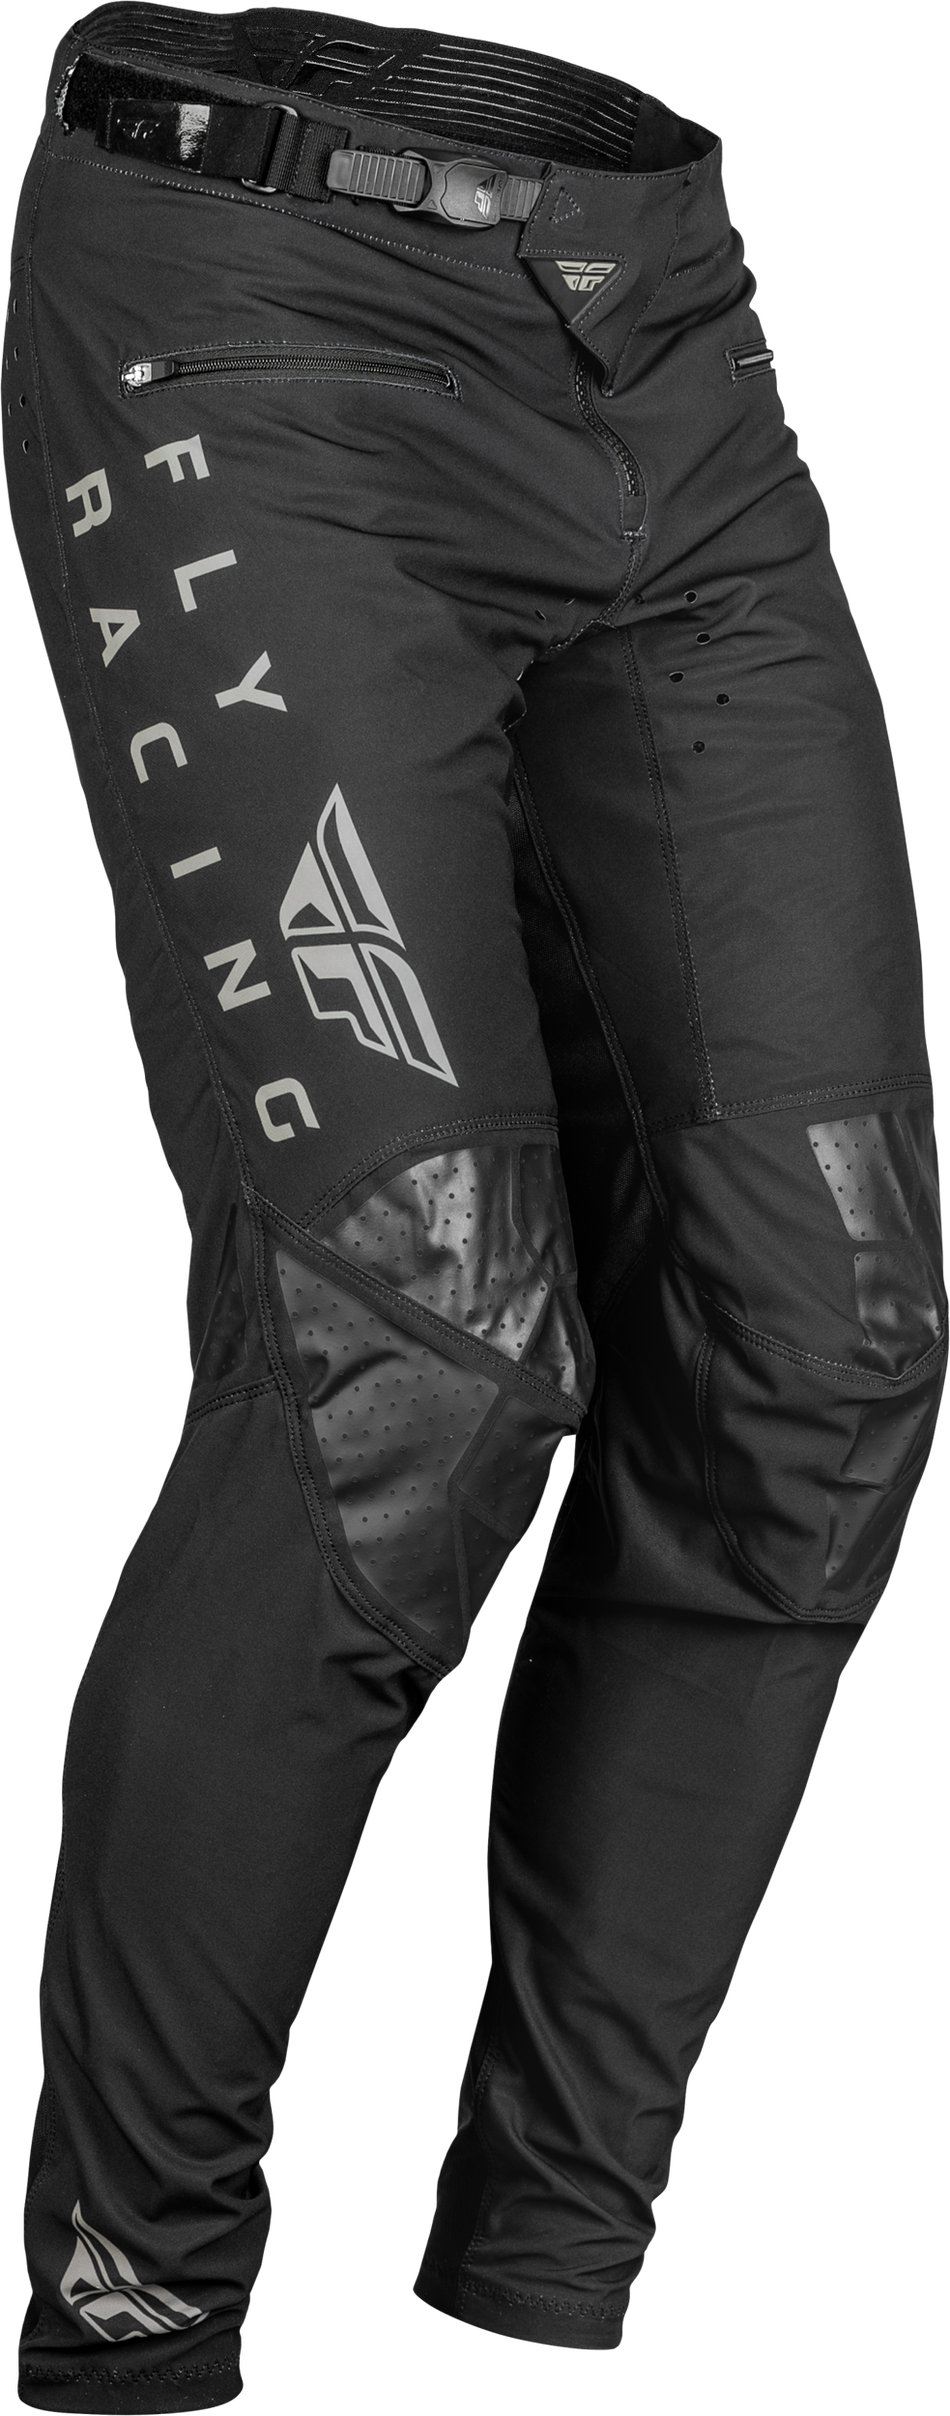 FLY RACING Youth Radium Bicycle Pants Black/Grey Sz 18 376-04018